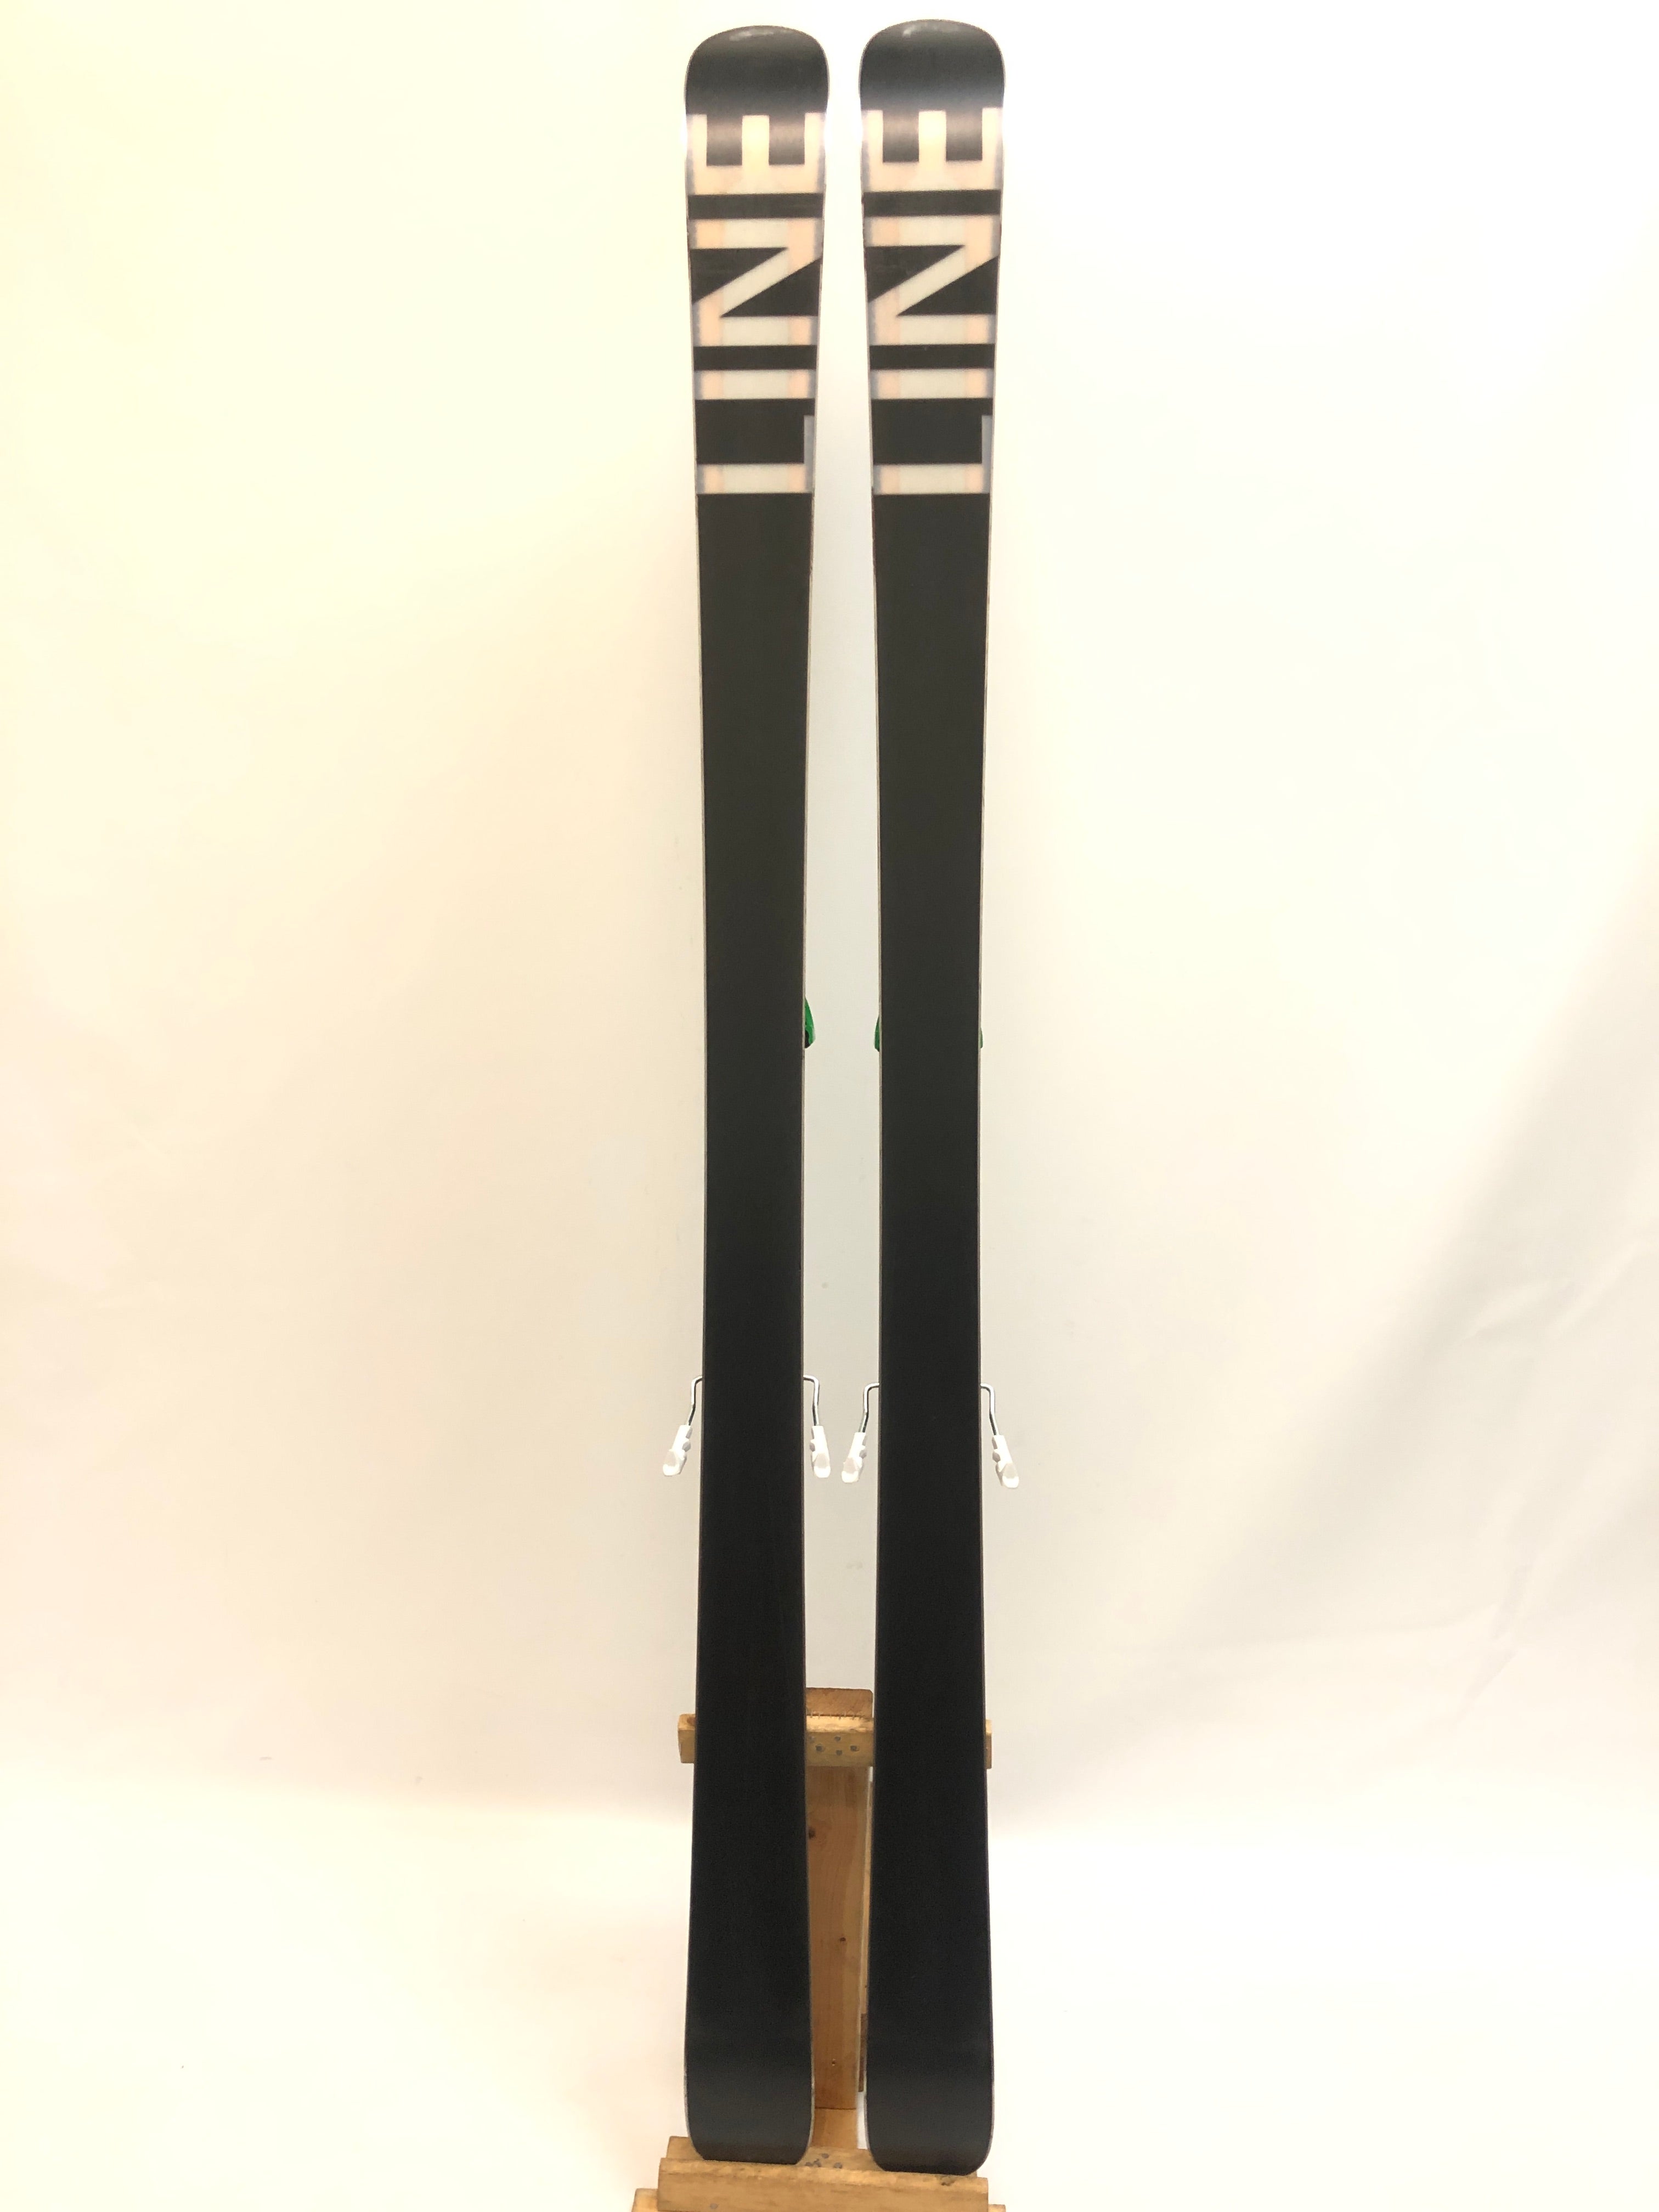 184cm Line Prophet 85 Twin Tip Skis with Bindings | SidelineSwap